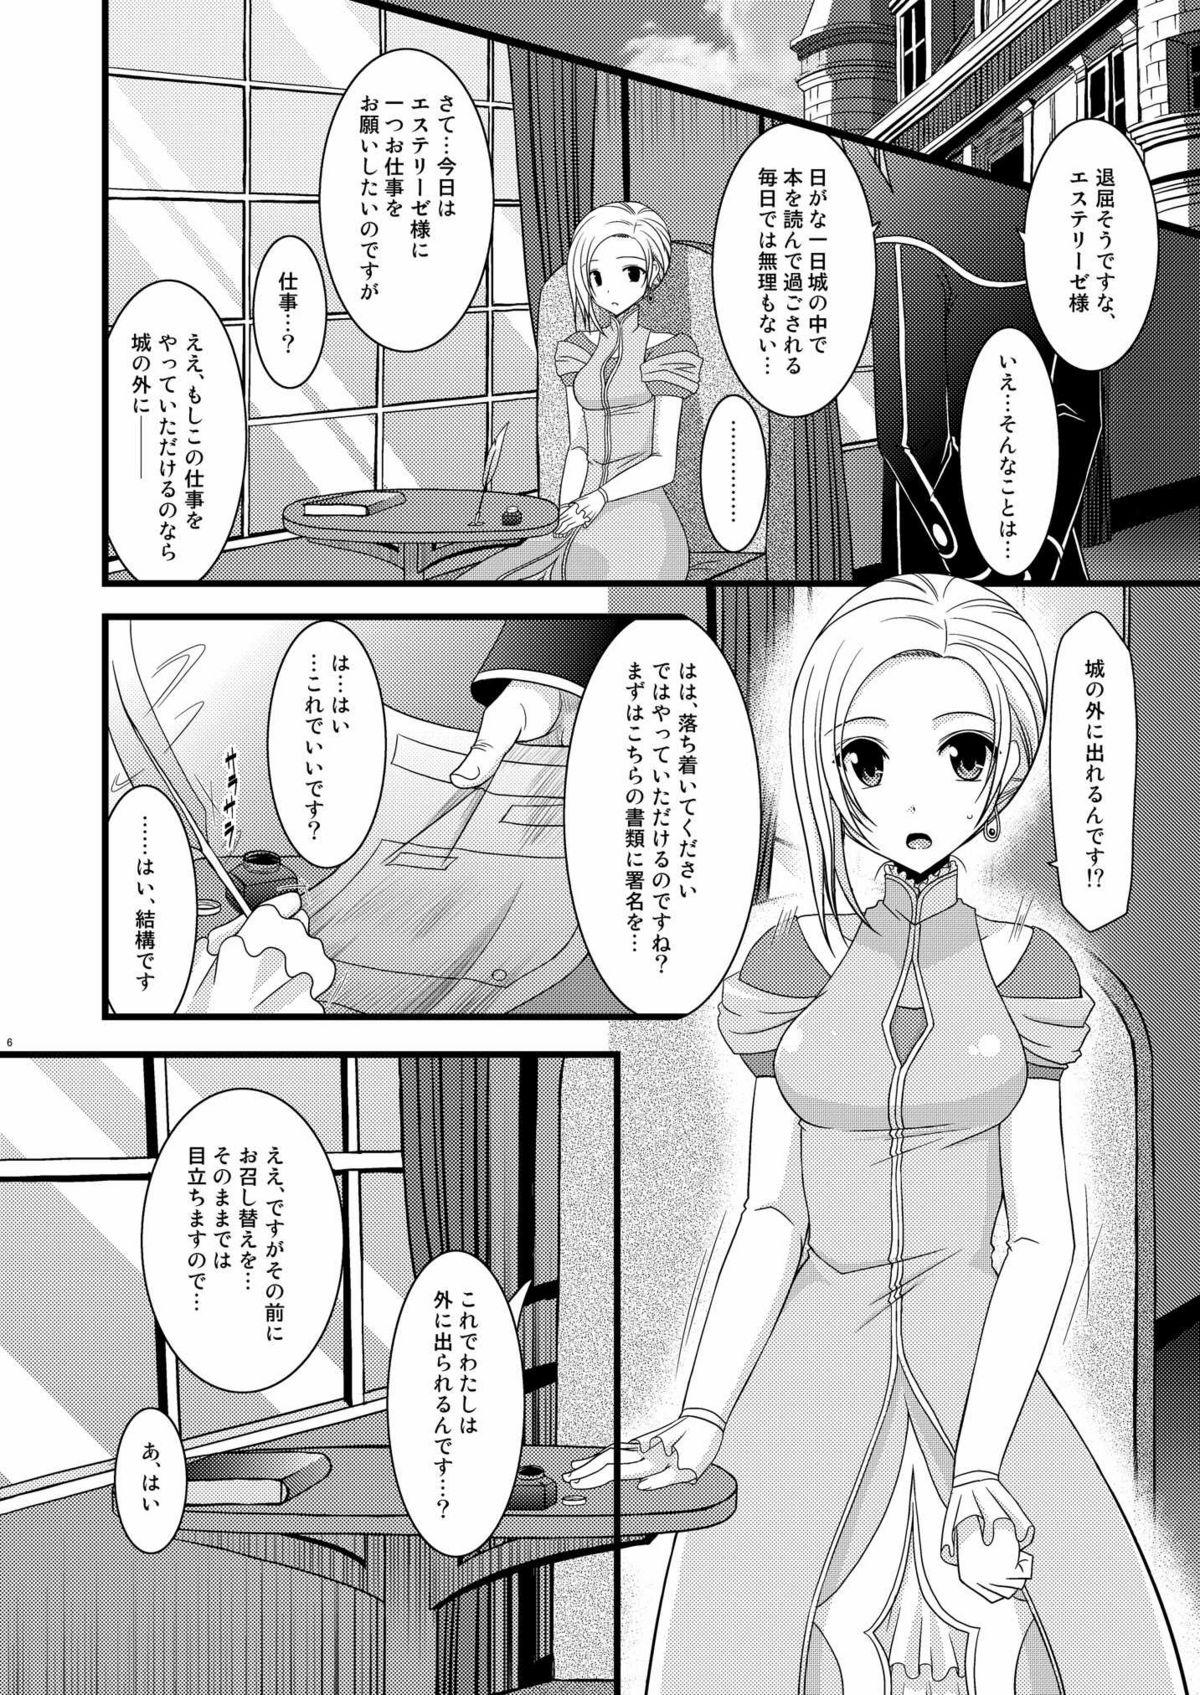 Big Pussy Mangetsu San Tan - Tales of vesperia Home - Page 6